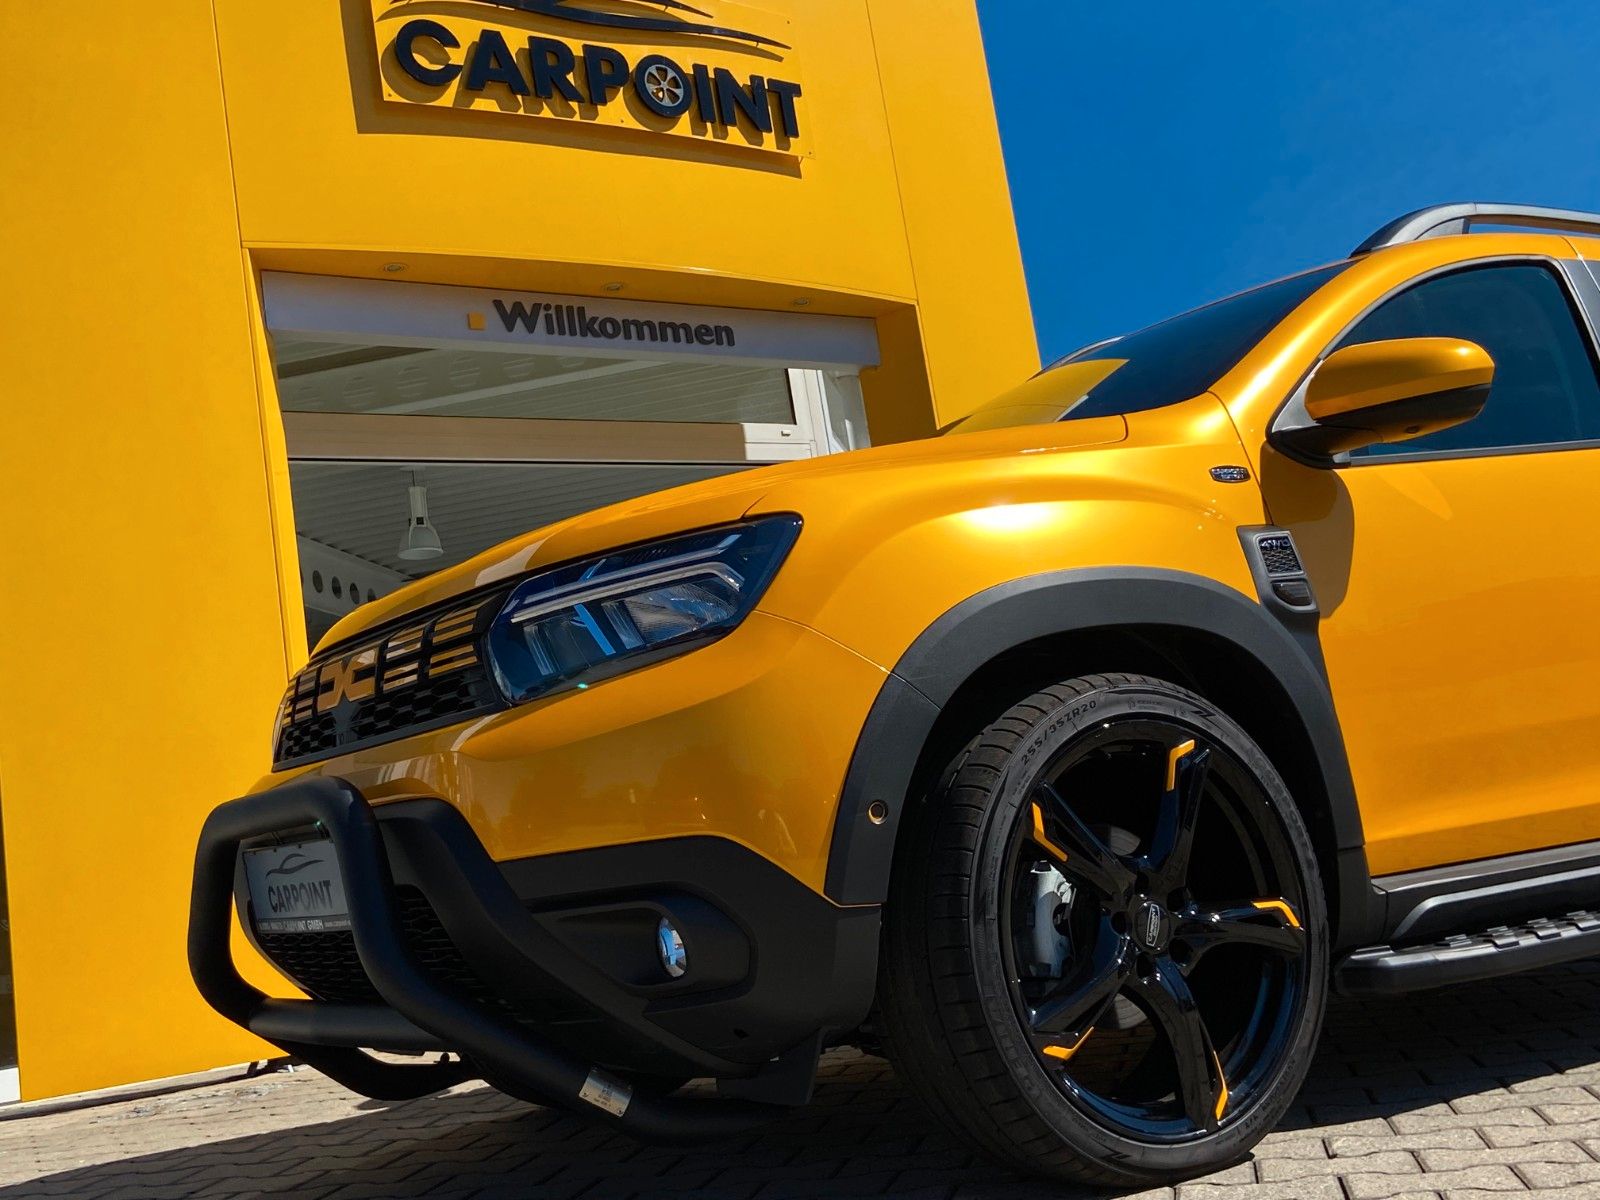 Dacia Duster TCe 150 4WD CARPOINT GELB EDITION – Carpoint NRW